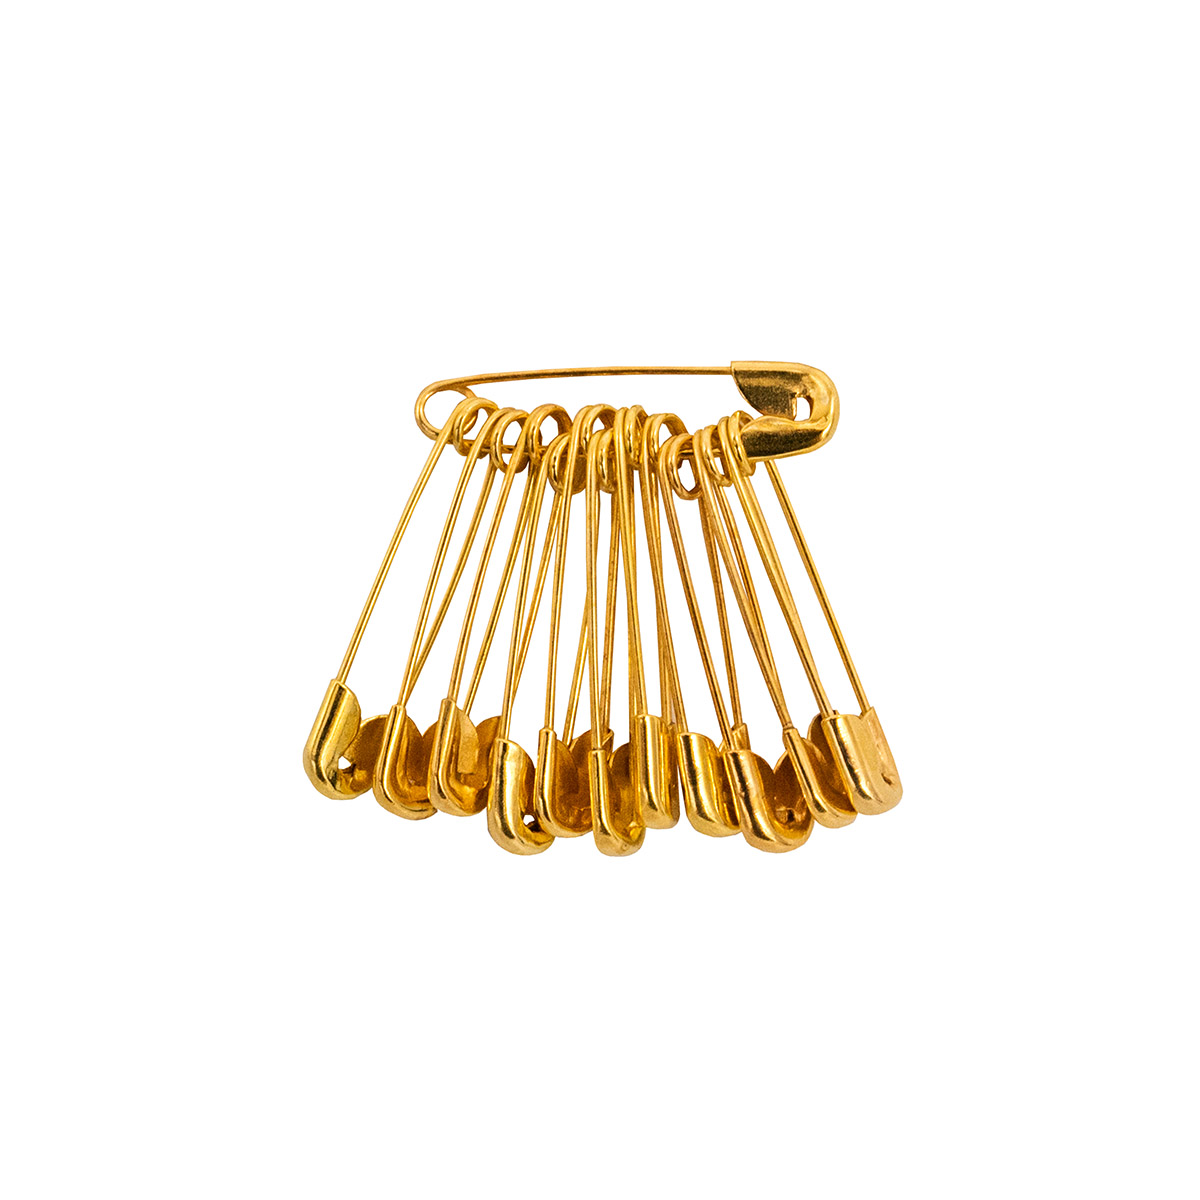 Булавки английские №000, 1,8 см (1728 шт), цвет: золото, арт. 0333-5400